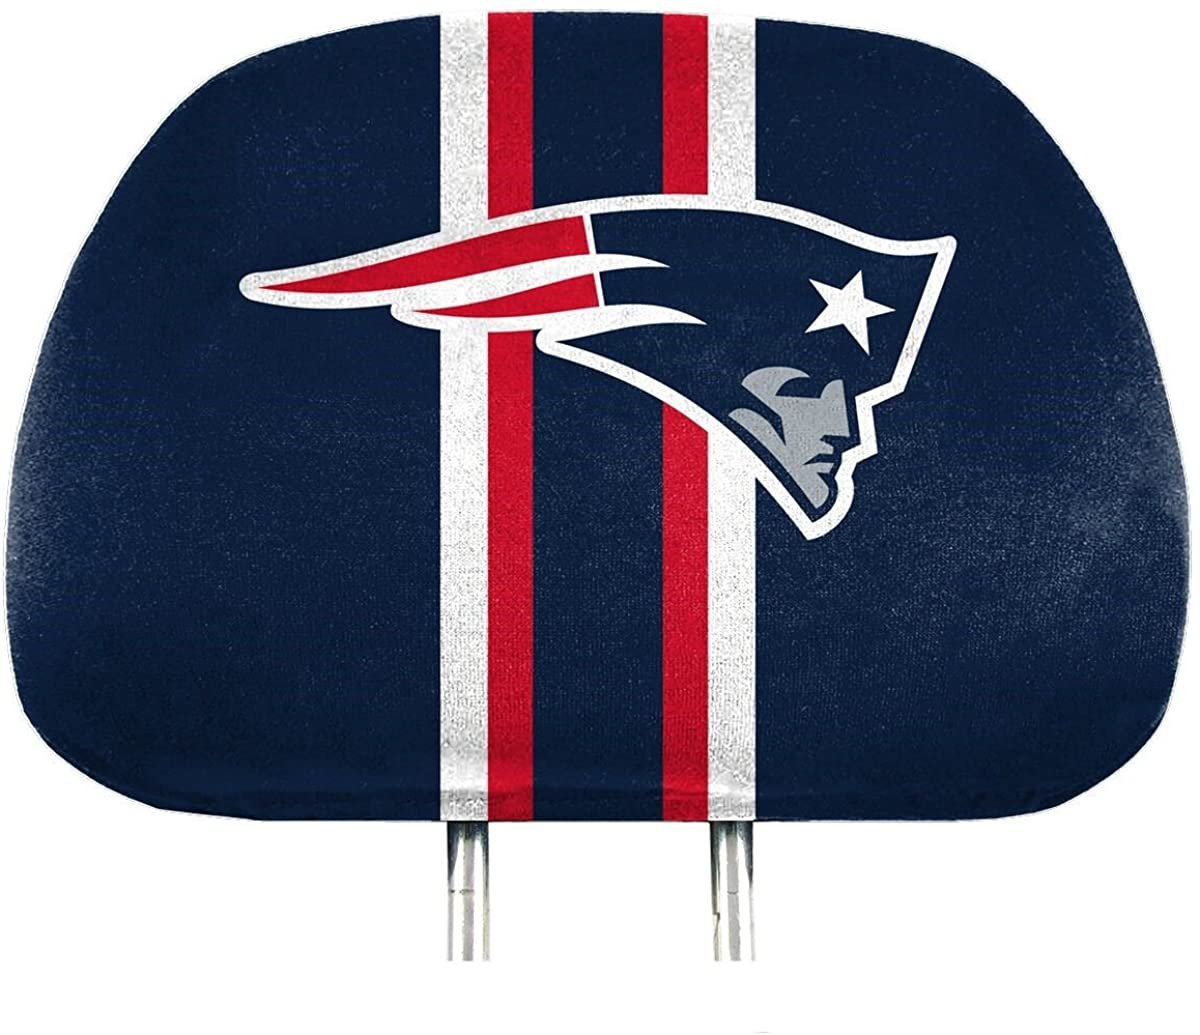 New England Patriots Premium Pair of Auto Head Rest Covers, Full Color Printed, Elastic, 10x14 Inch